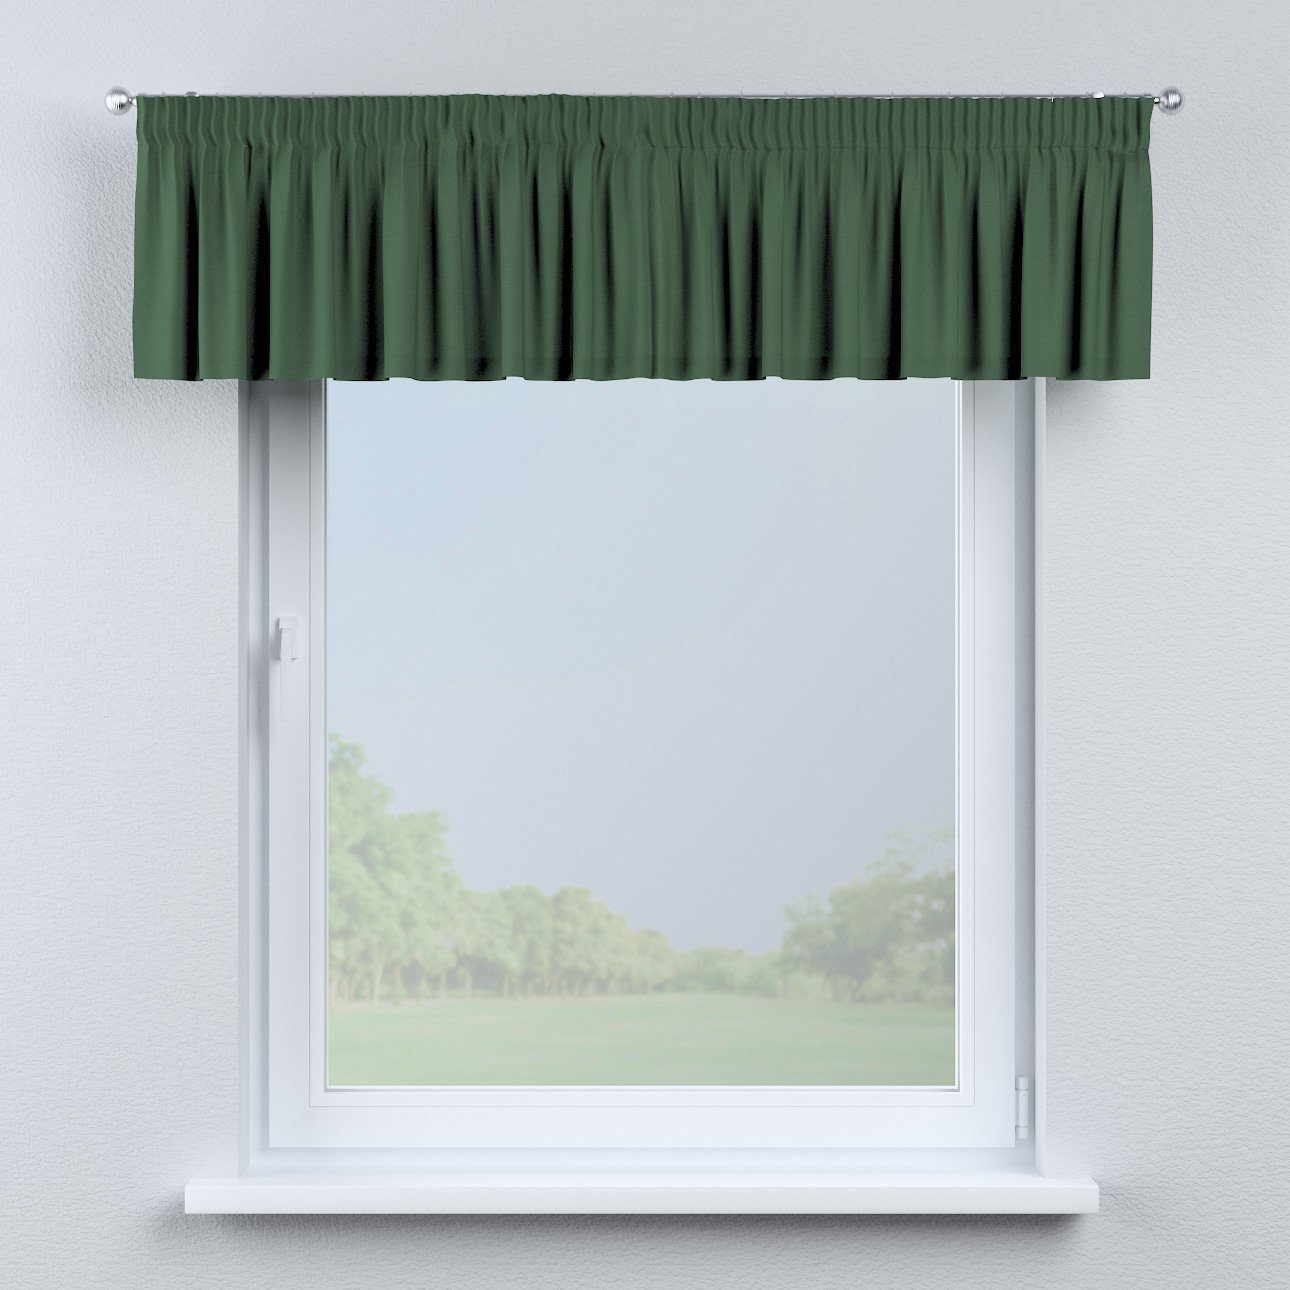 waldgrün x Cotton cm, Vorhang mit Panama, 130 Kräuselband Dekoria 40